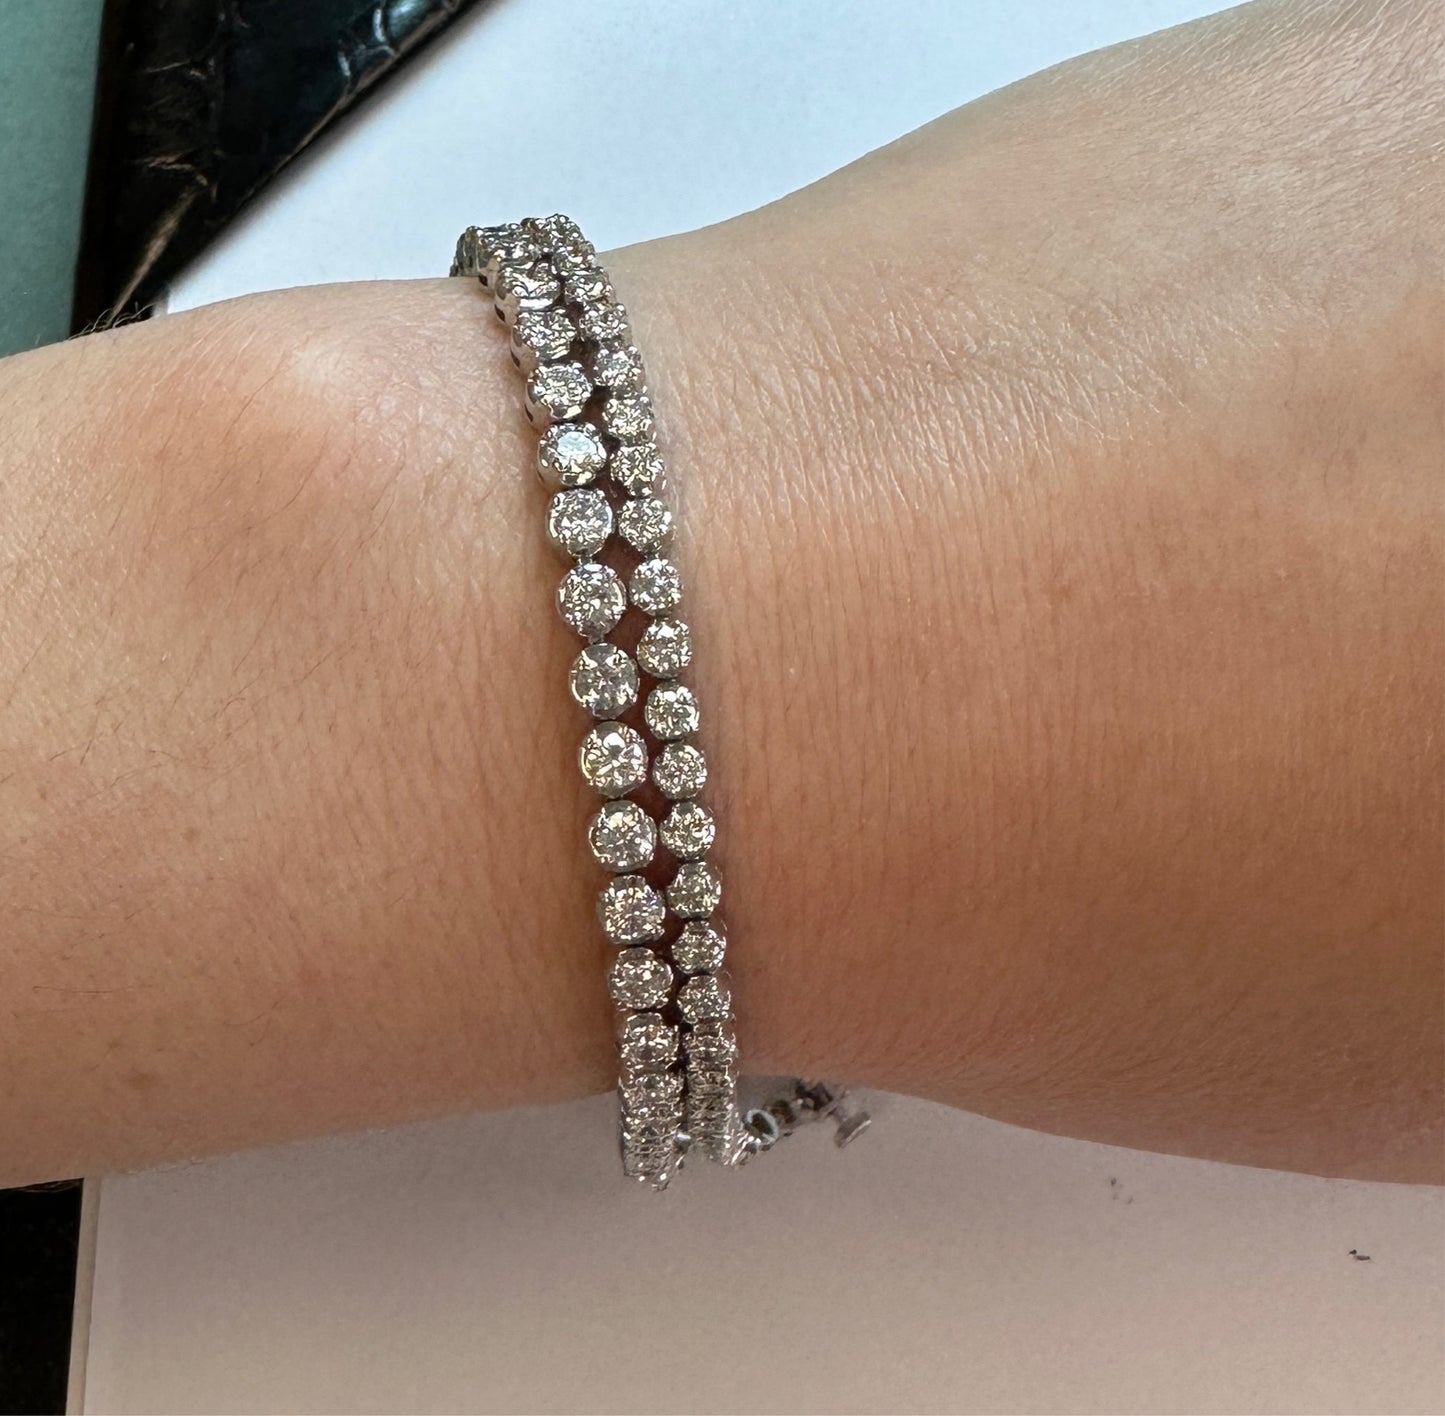 A woman's wrist with a 2.5ct lab grown diamond tennis bracelet and a 4ct lab grown diamond tennis bracelet.